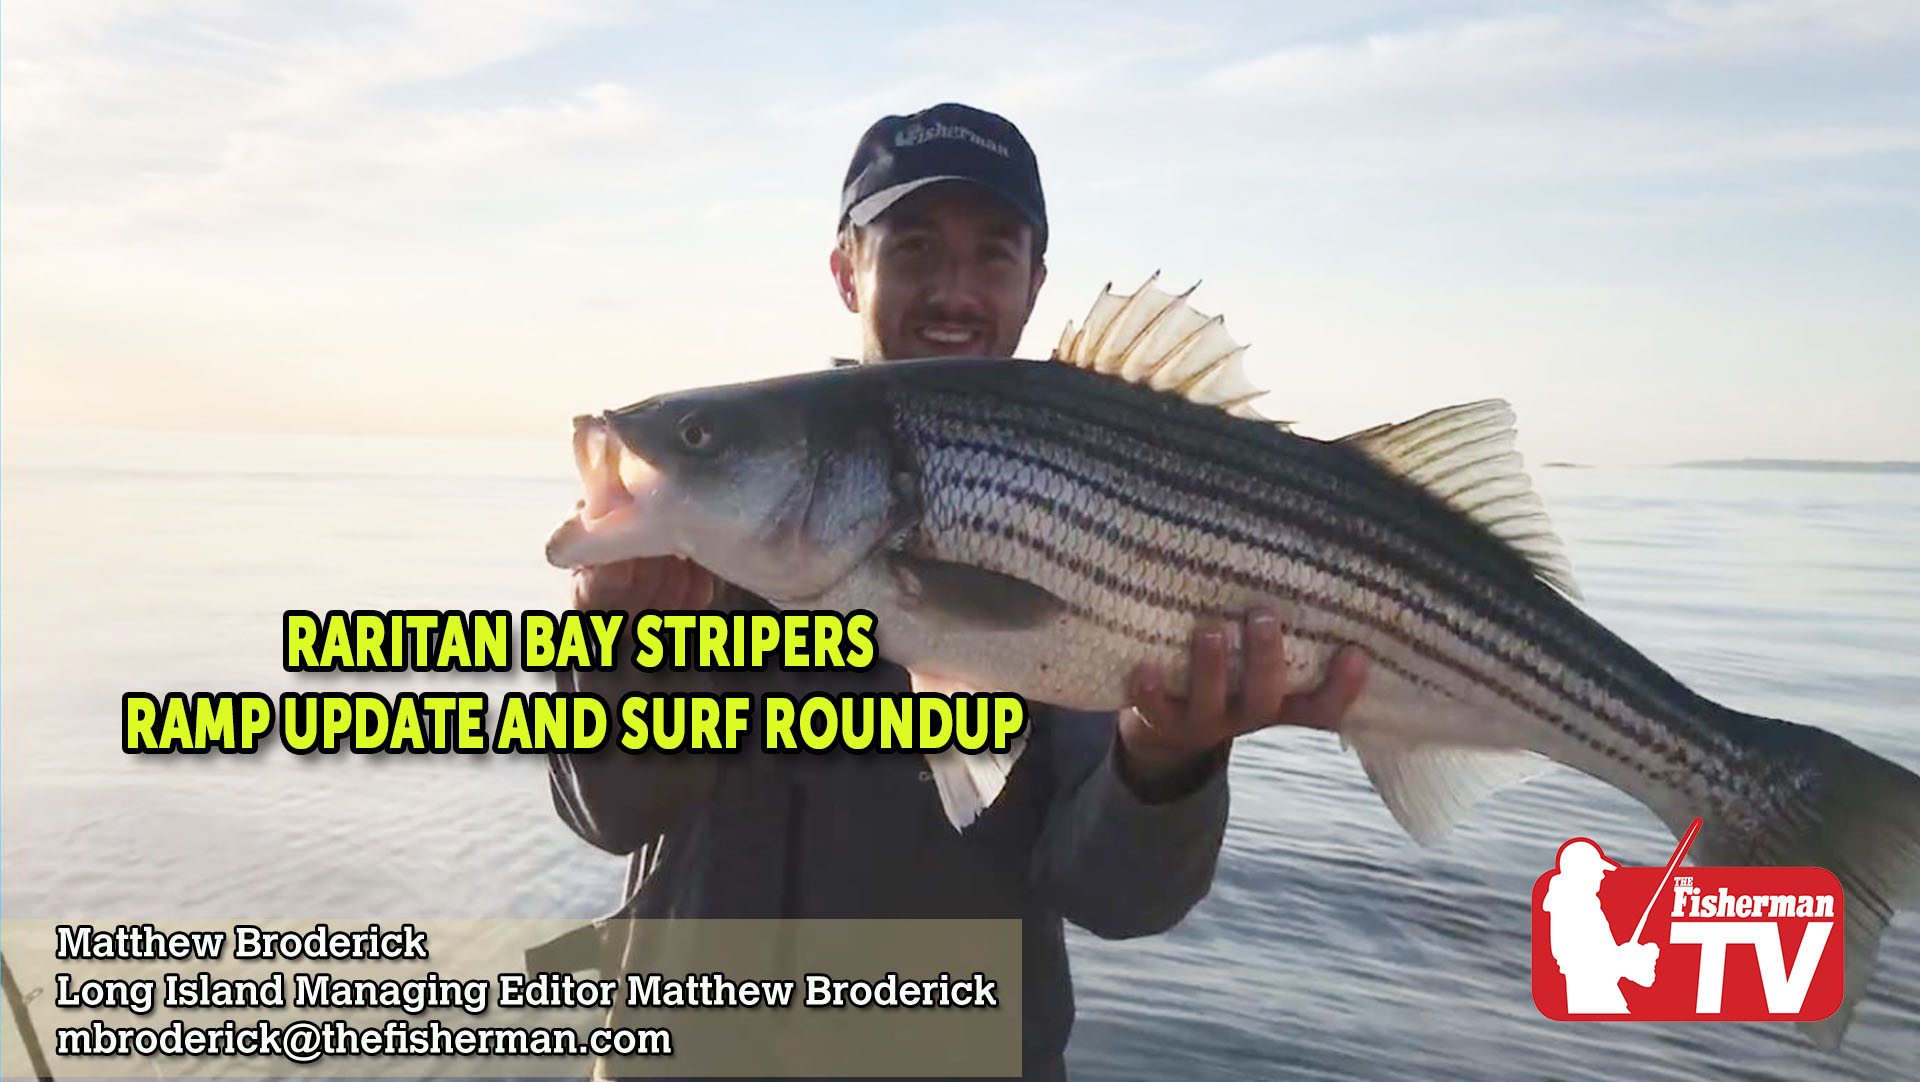 Long Island Video Fishing Forecast - April 22 2021 - The Fisherman